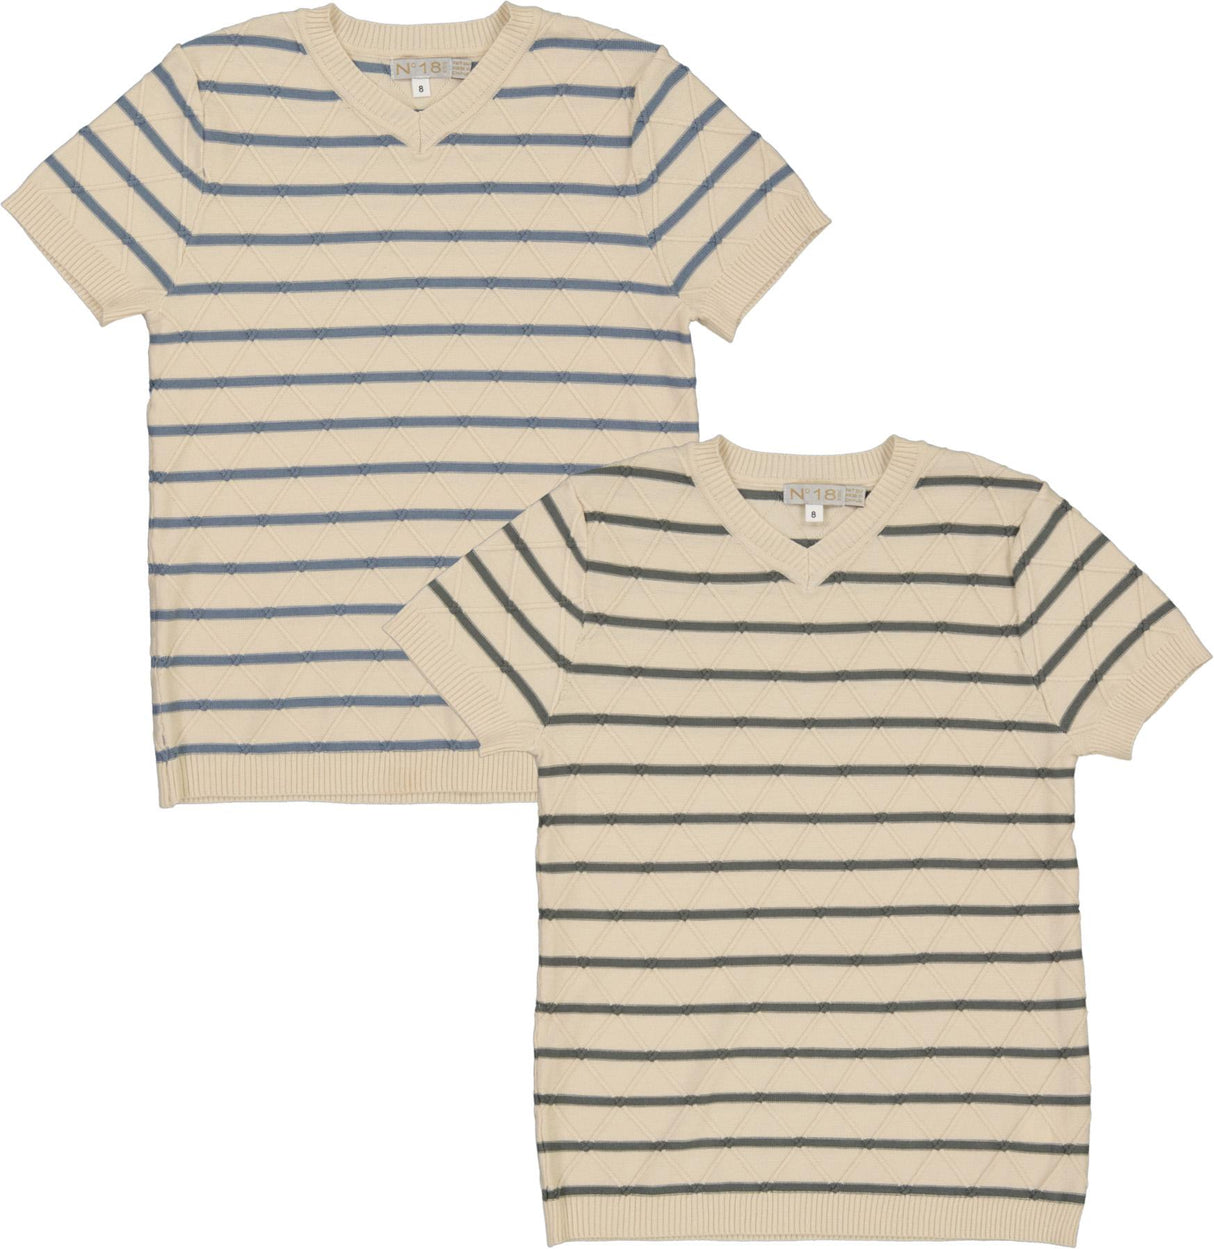 N° 18 Kids Boys Argyle Striped Short Sleeve Sweater - SB4CY2278